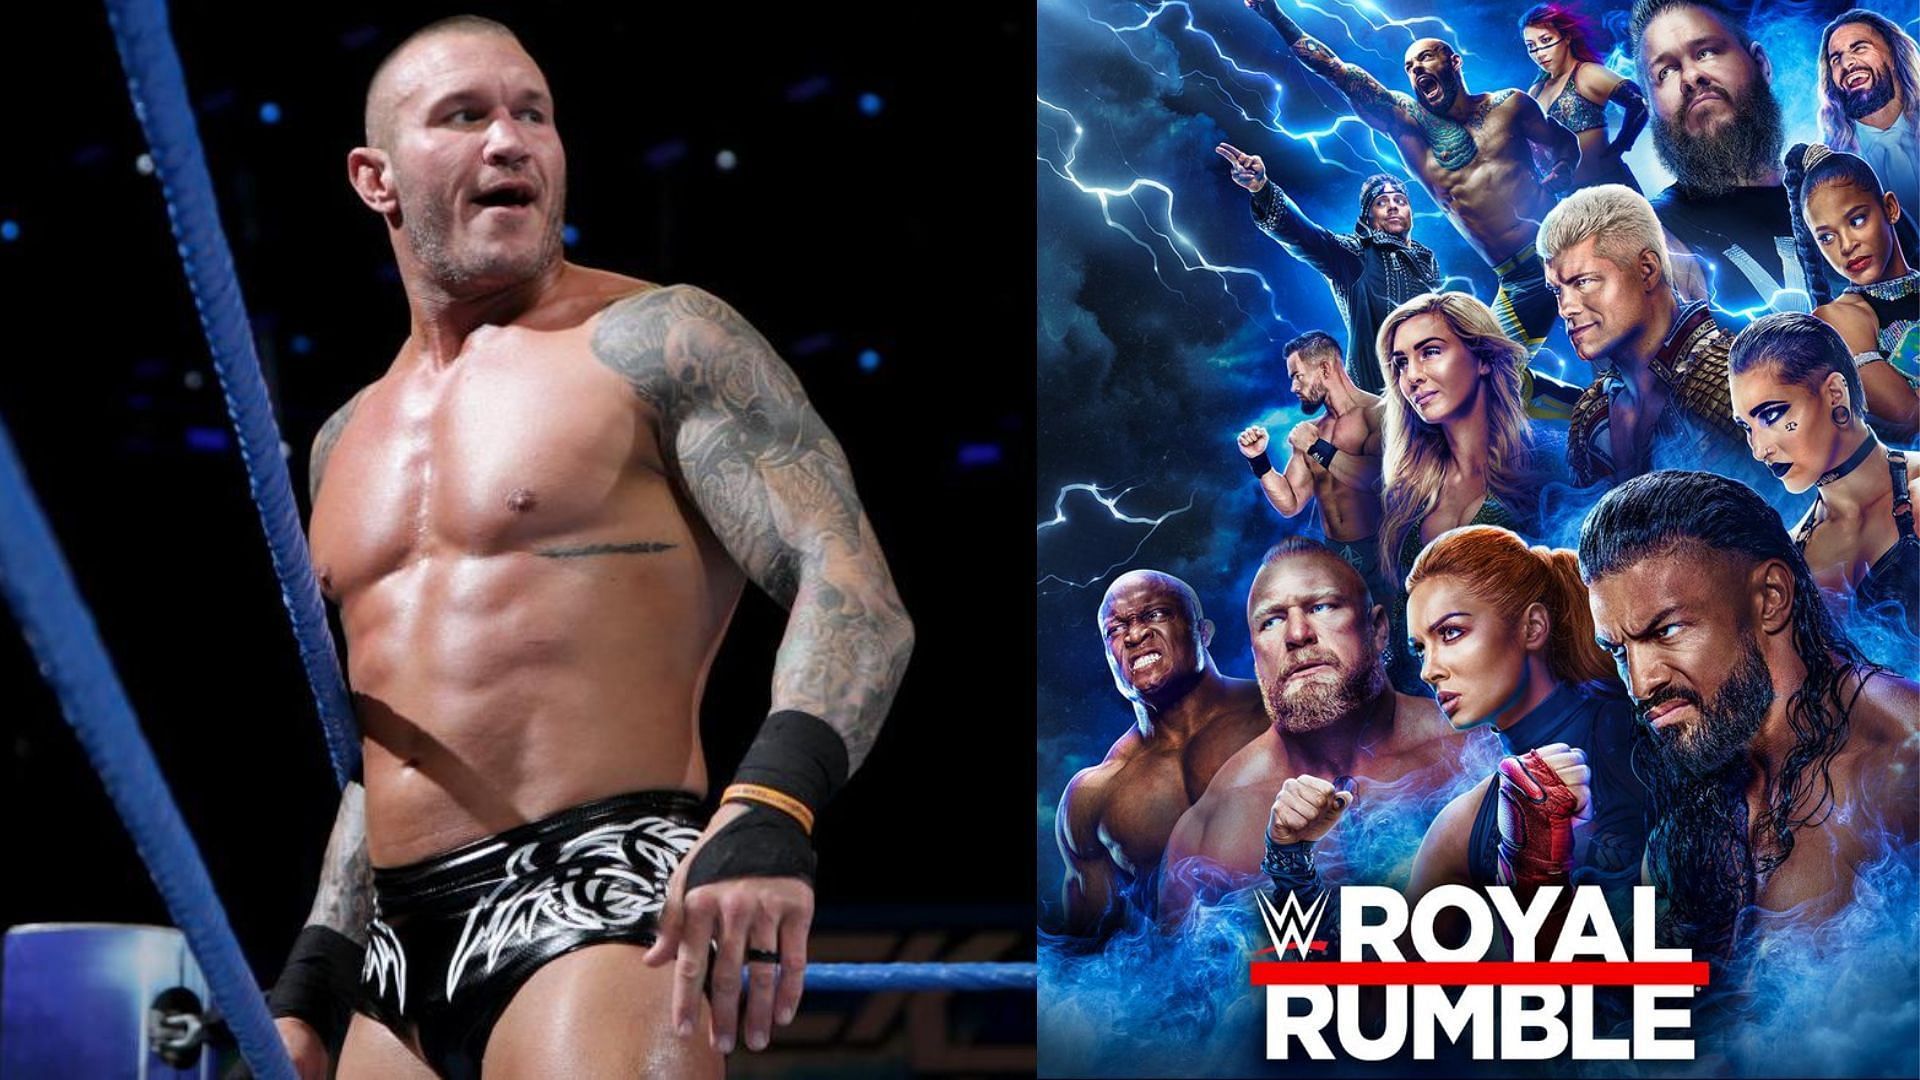 Should we expect a Randy Orton return at WWE Royal Rumble 2023?